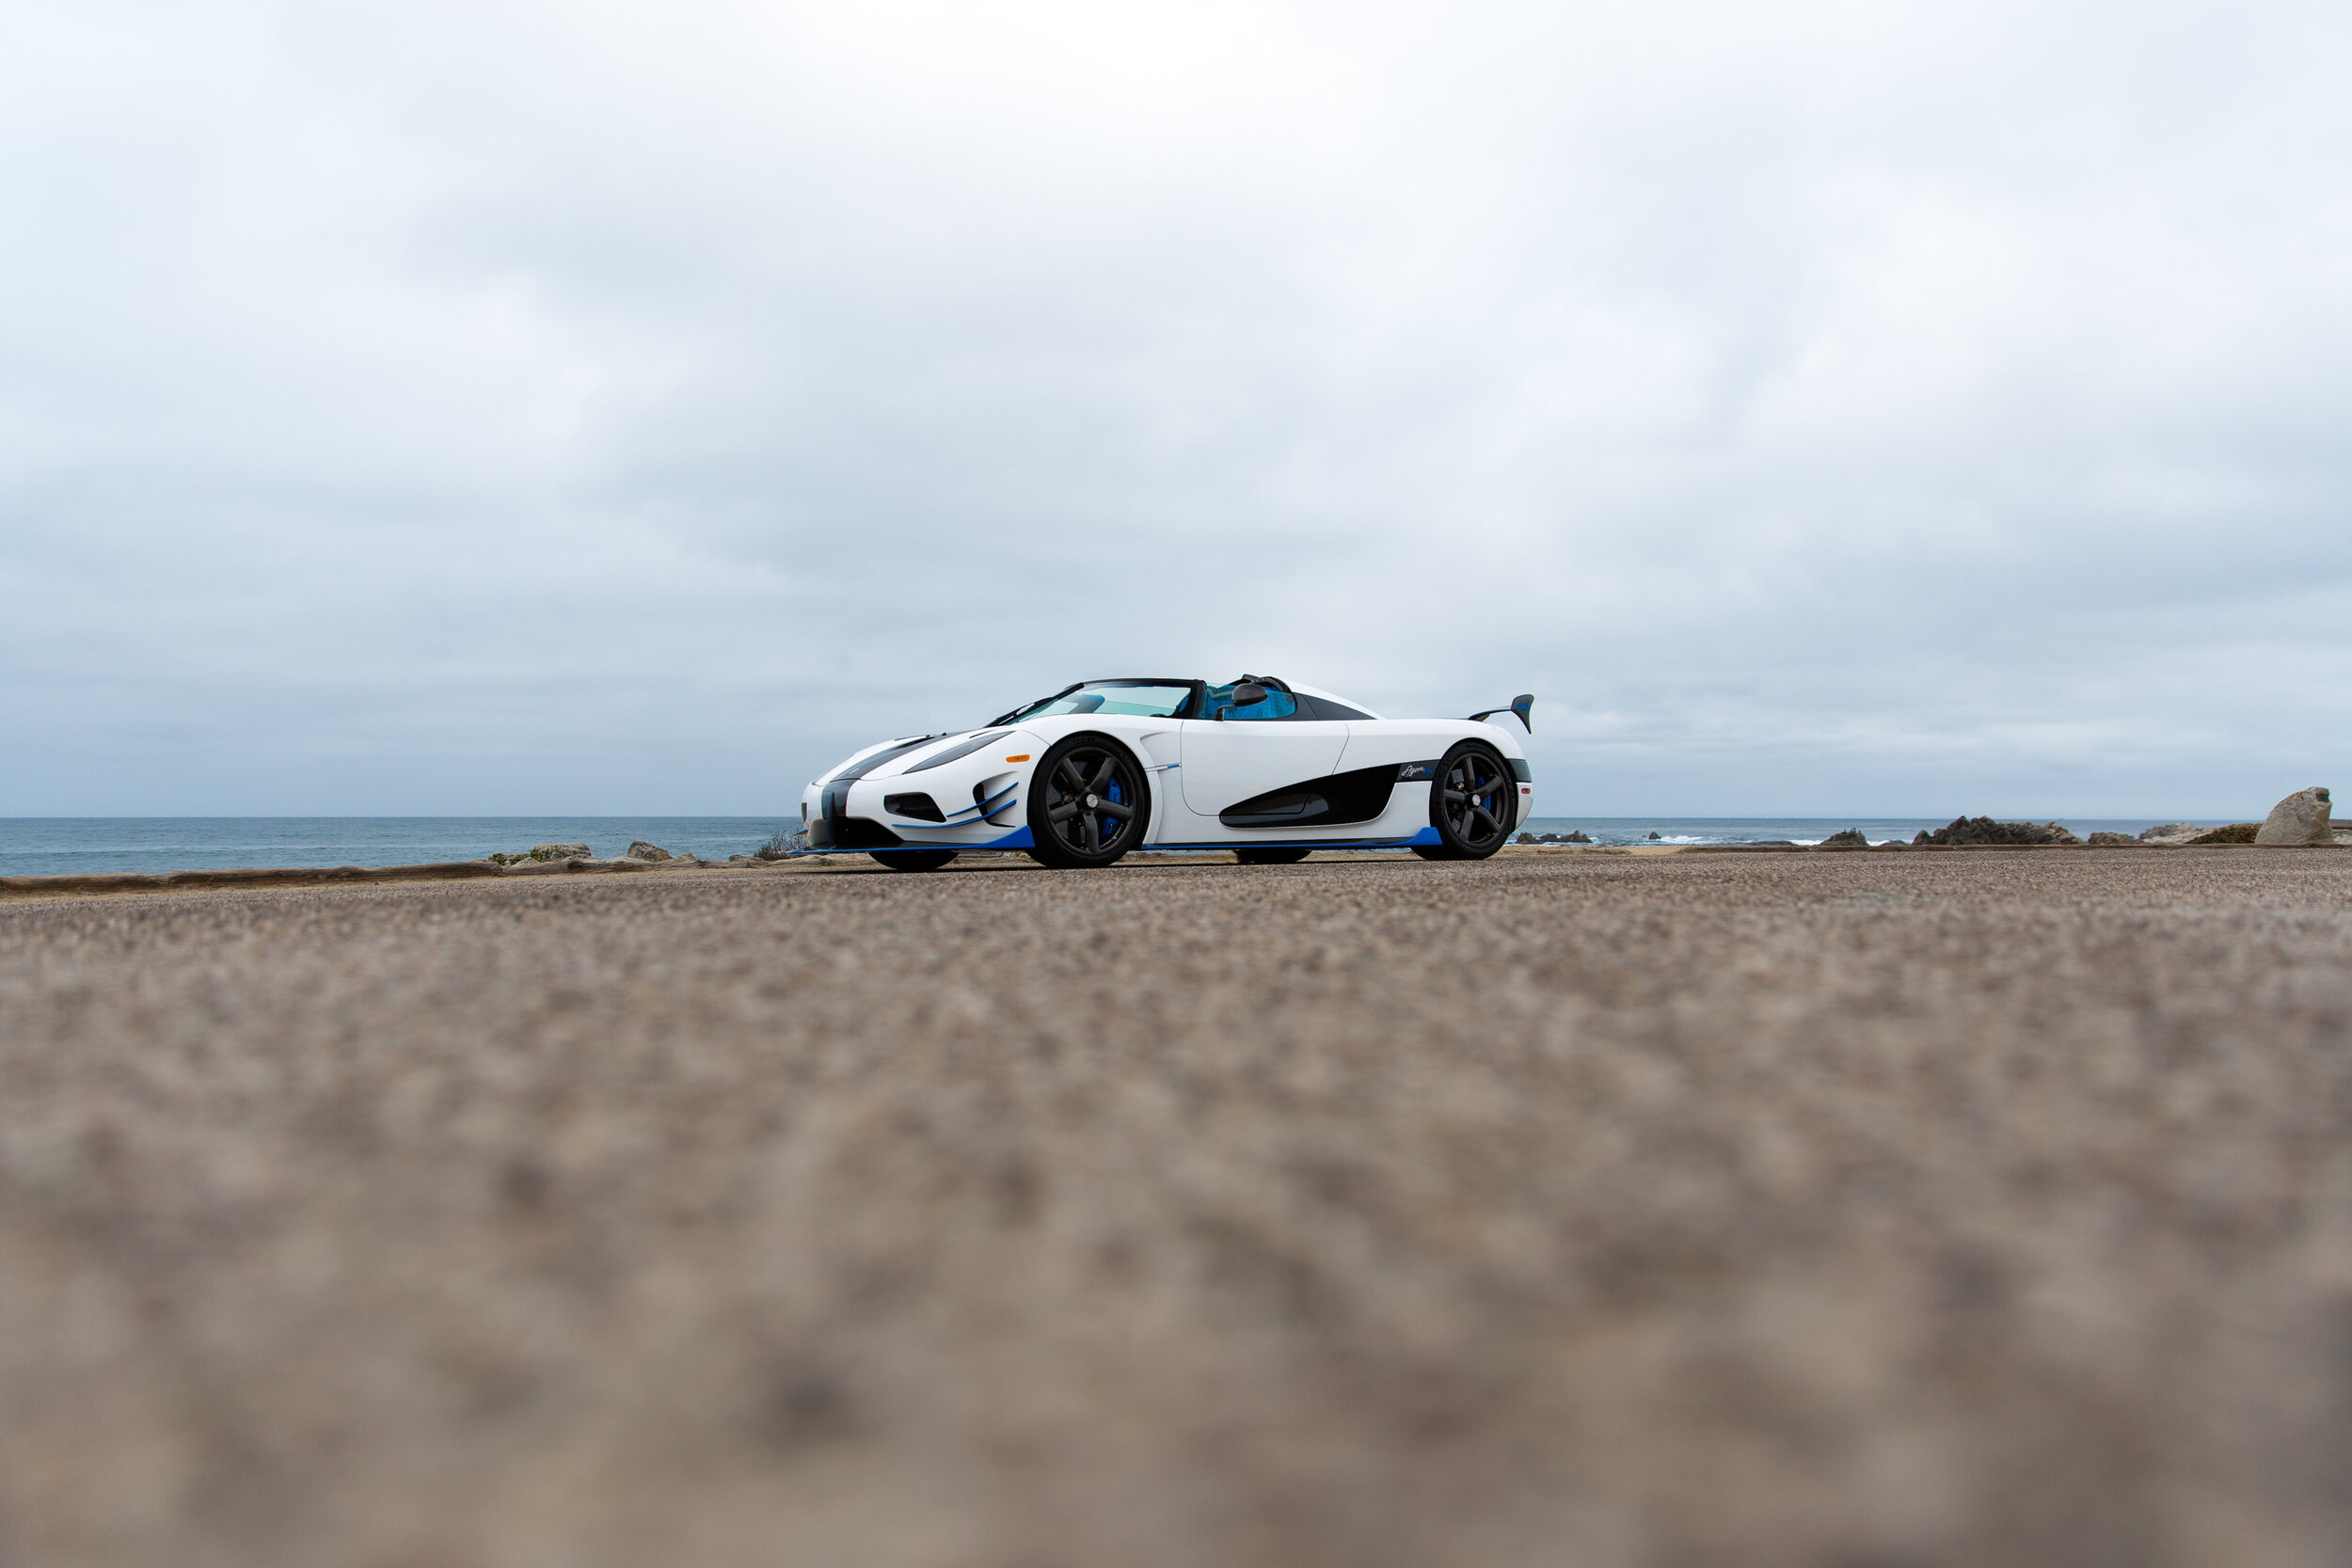 Stay_Driven_Monterey_Car_Week_Whitesse_Koenigsegg-5.jpg